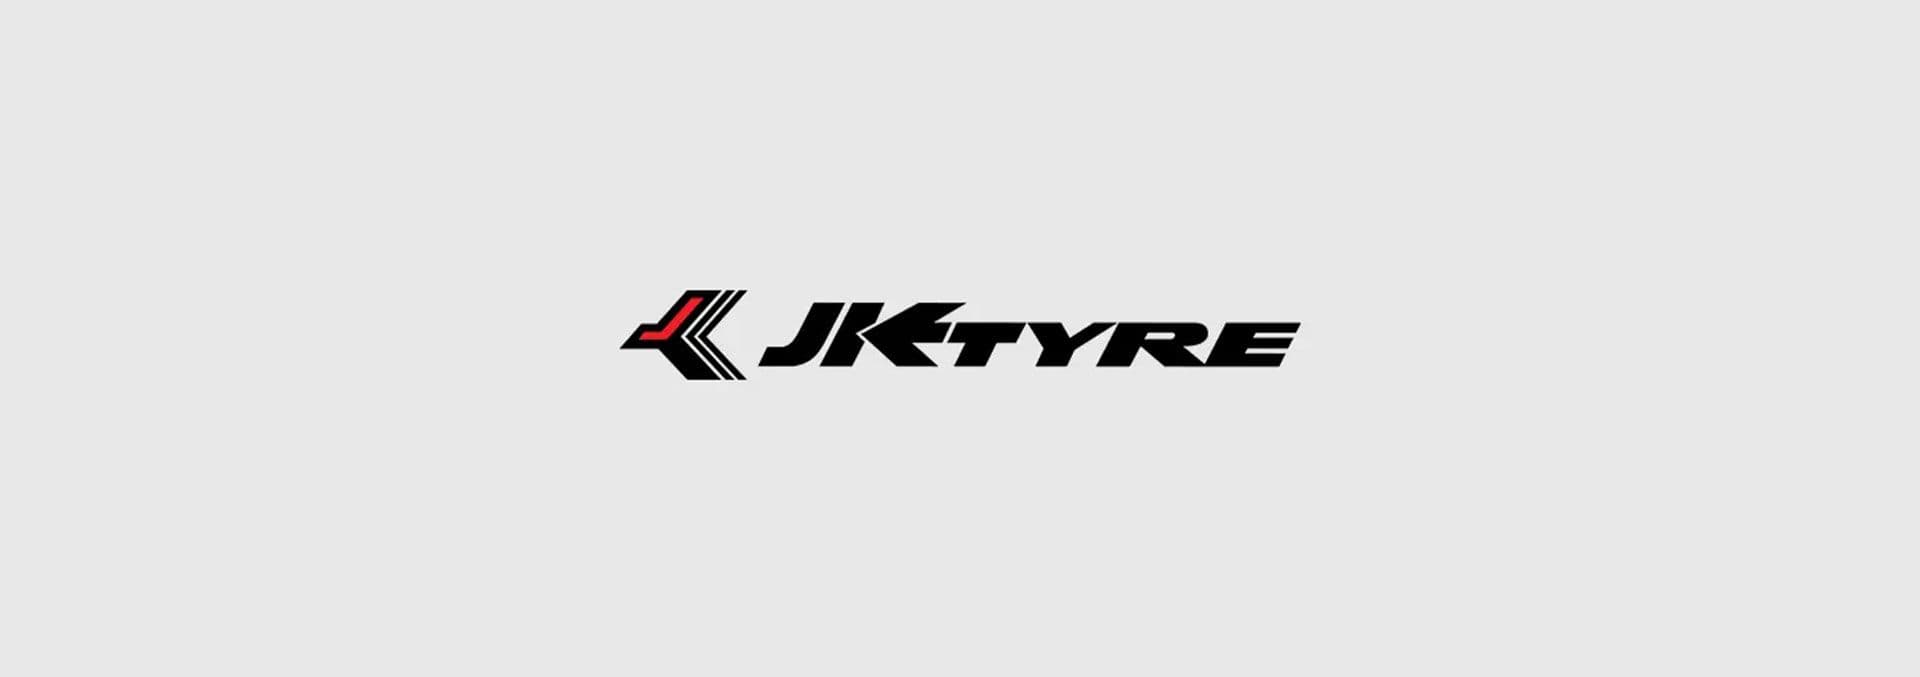 JK Tyre Limited